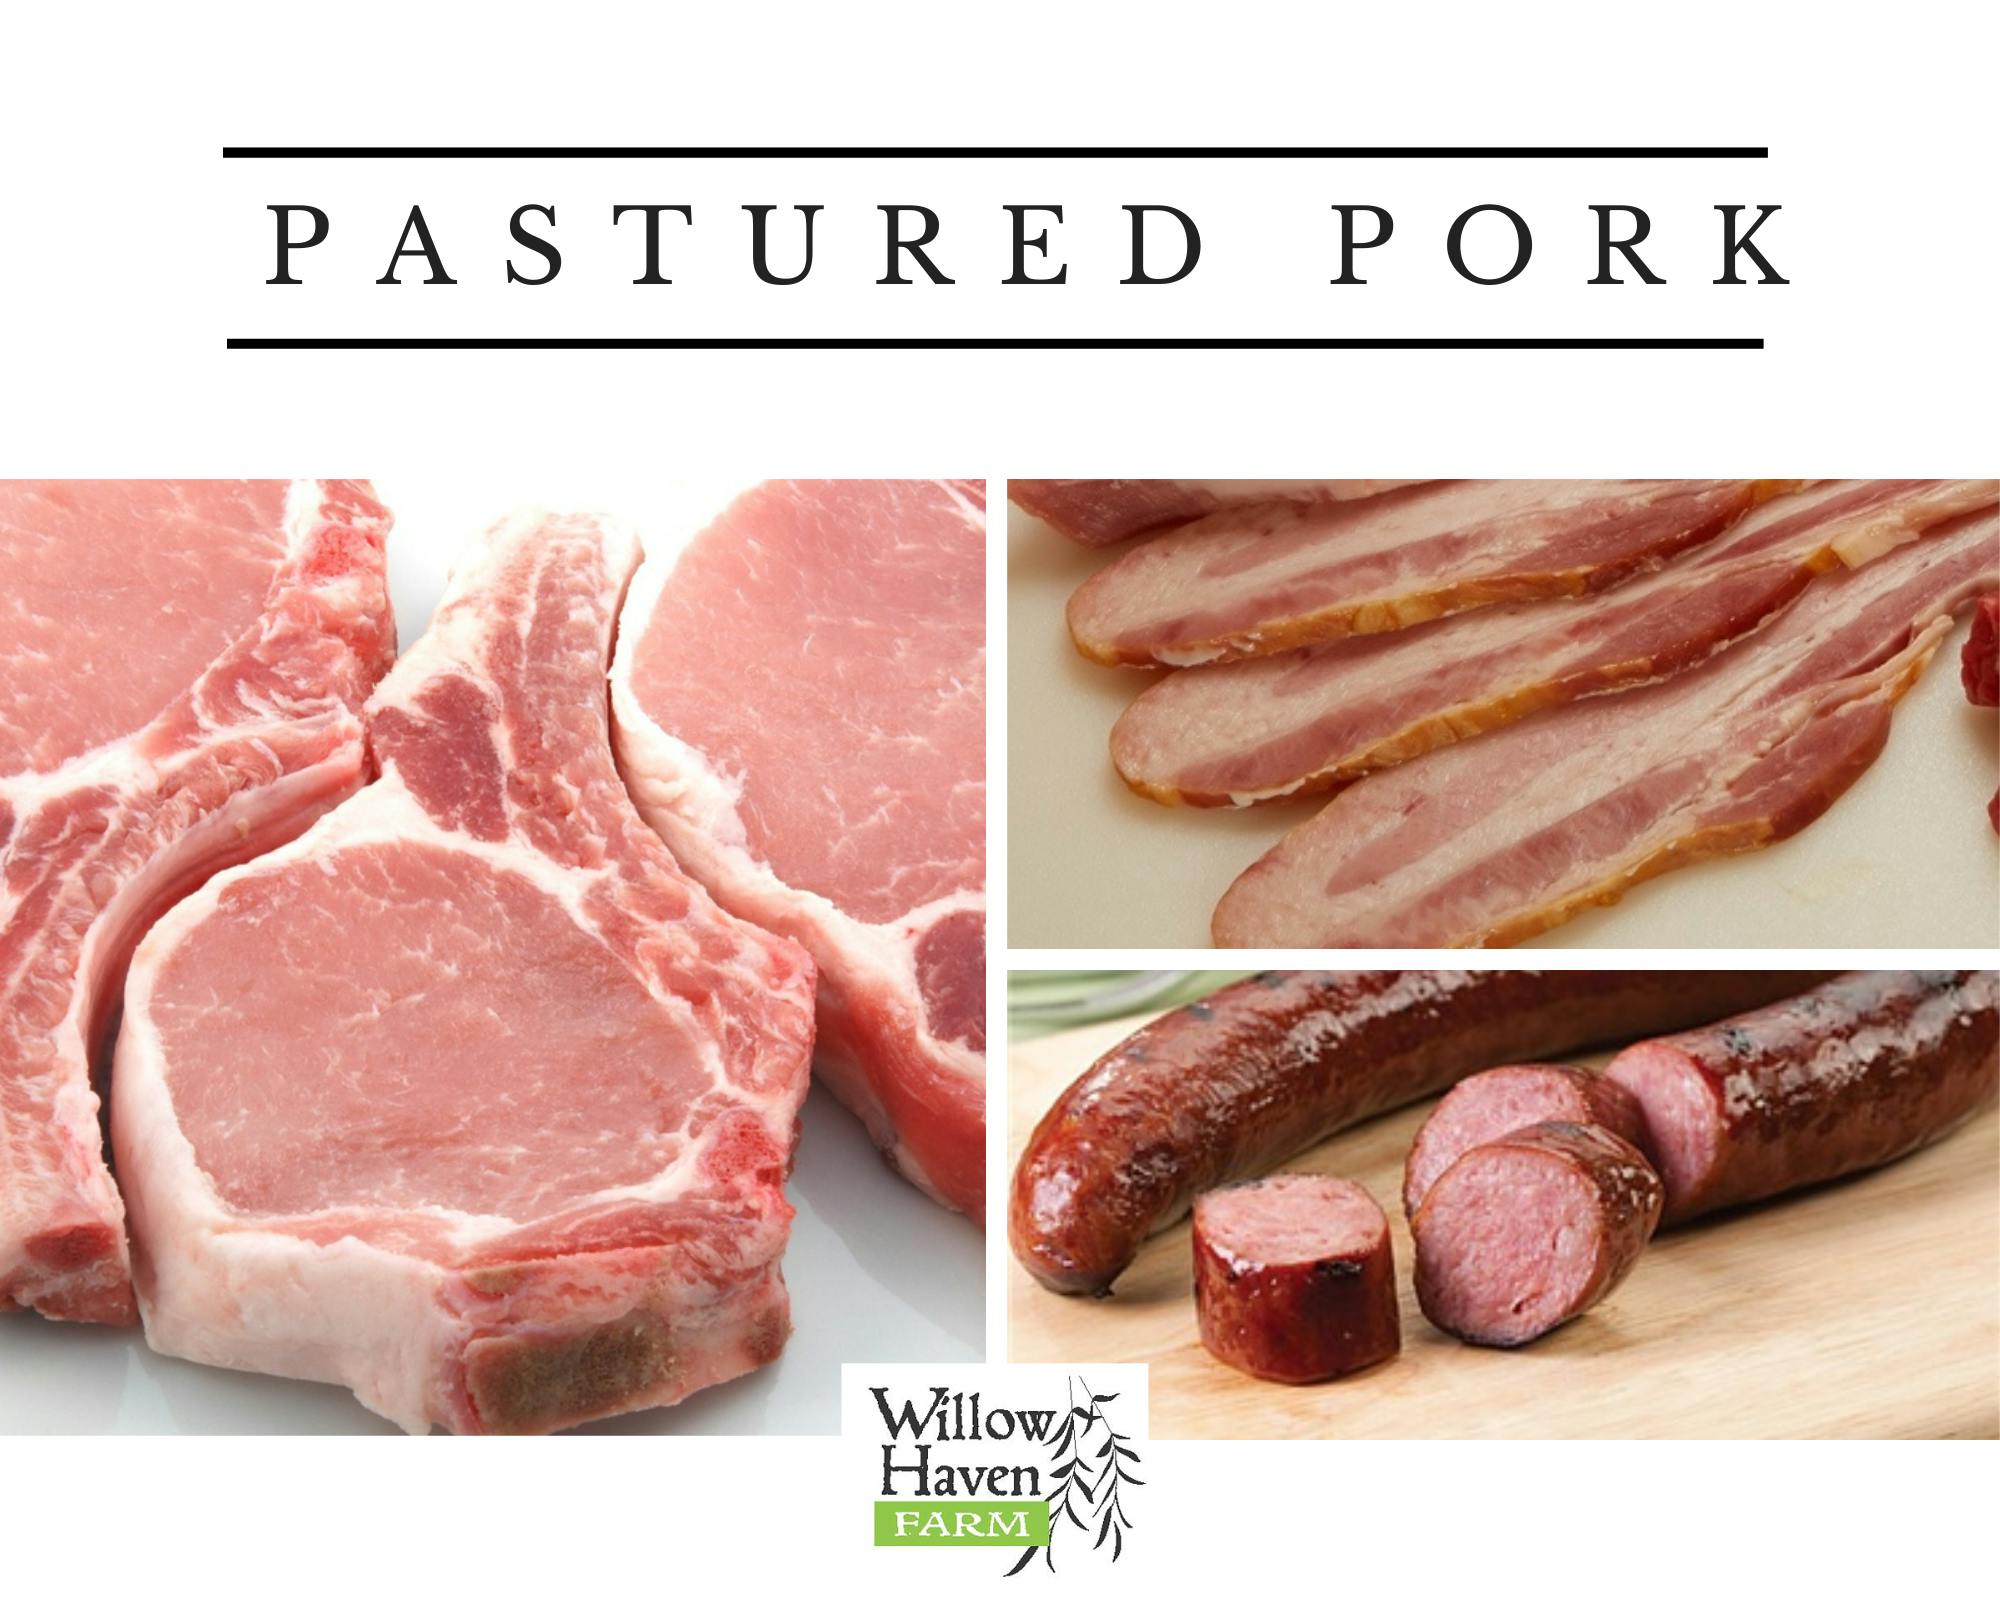 pastured pork chops, bacon, sausage